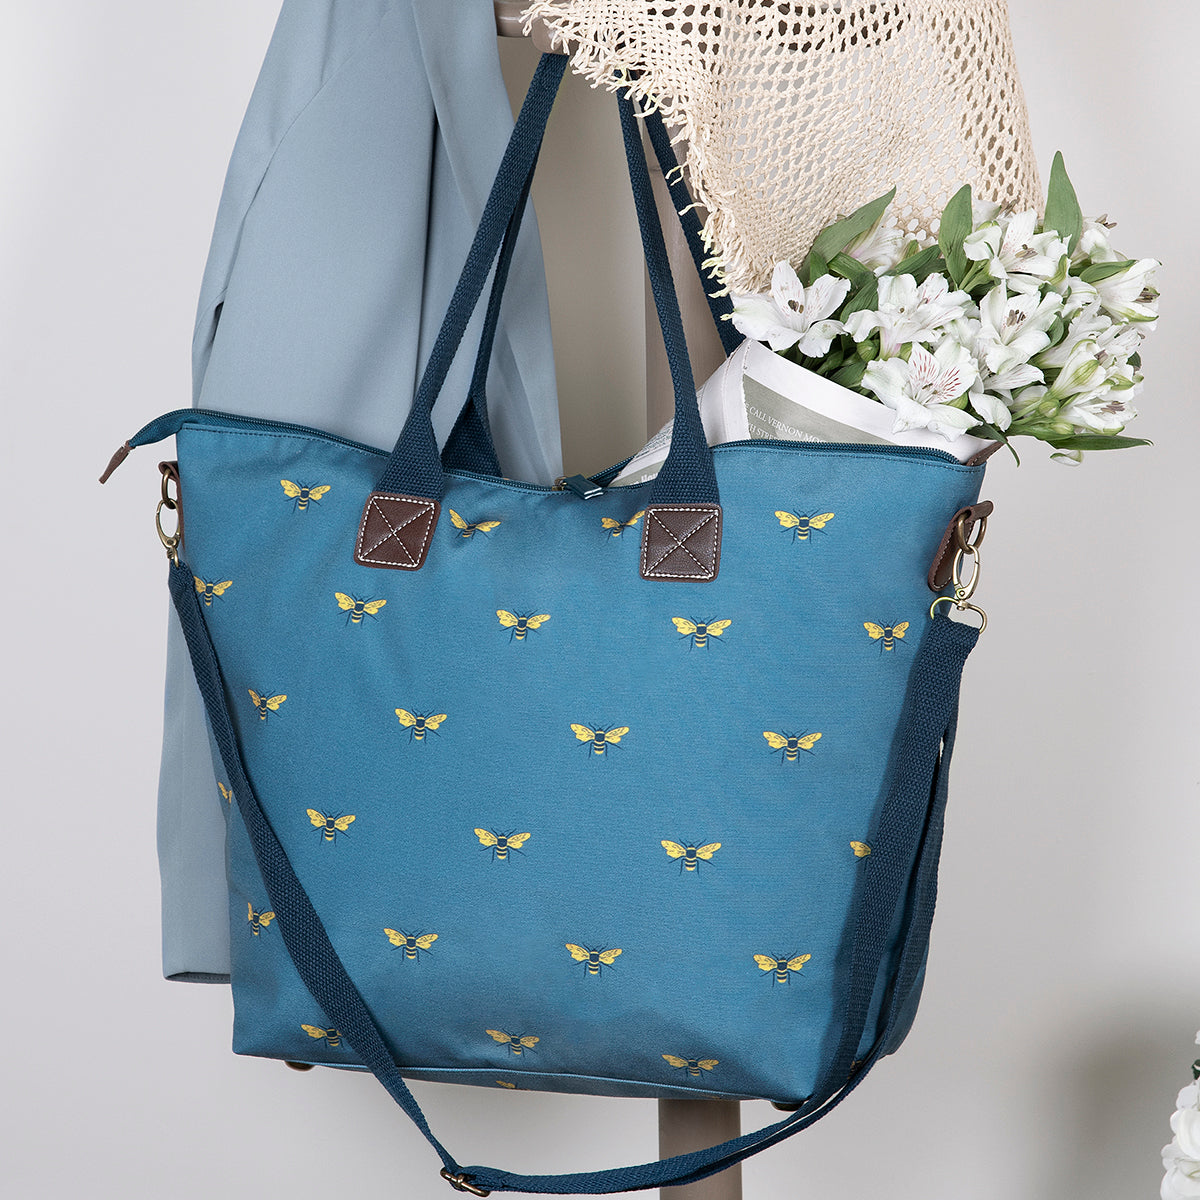 Teal coloured bag, gift idea for her by Sophie Allport